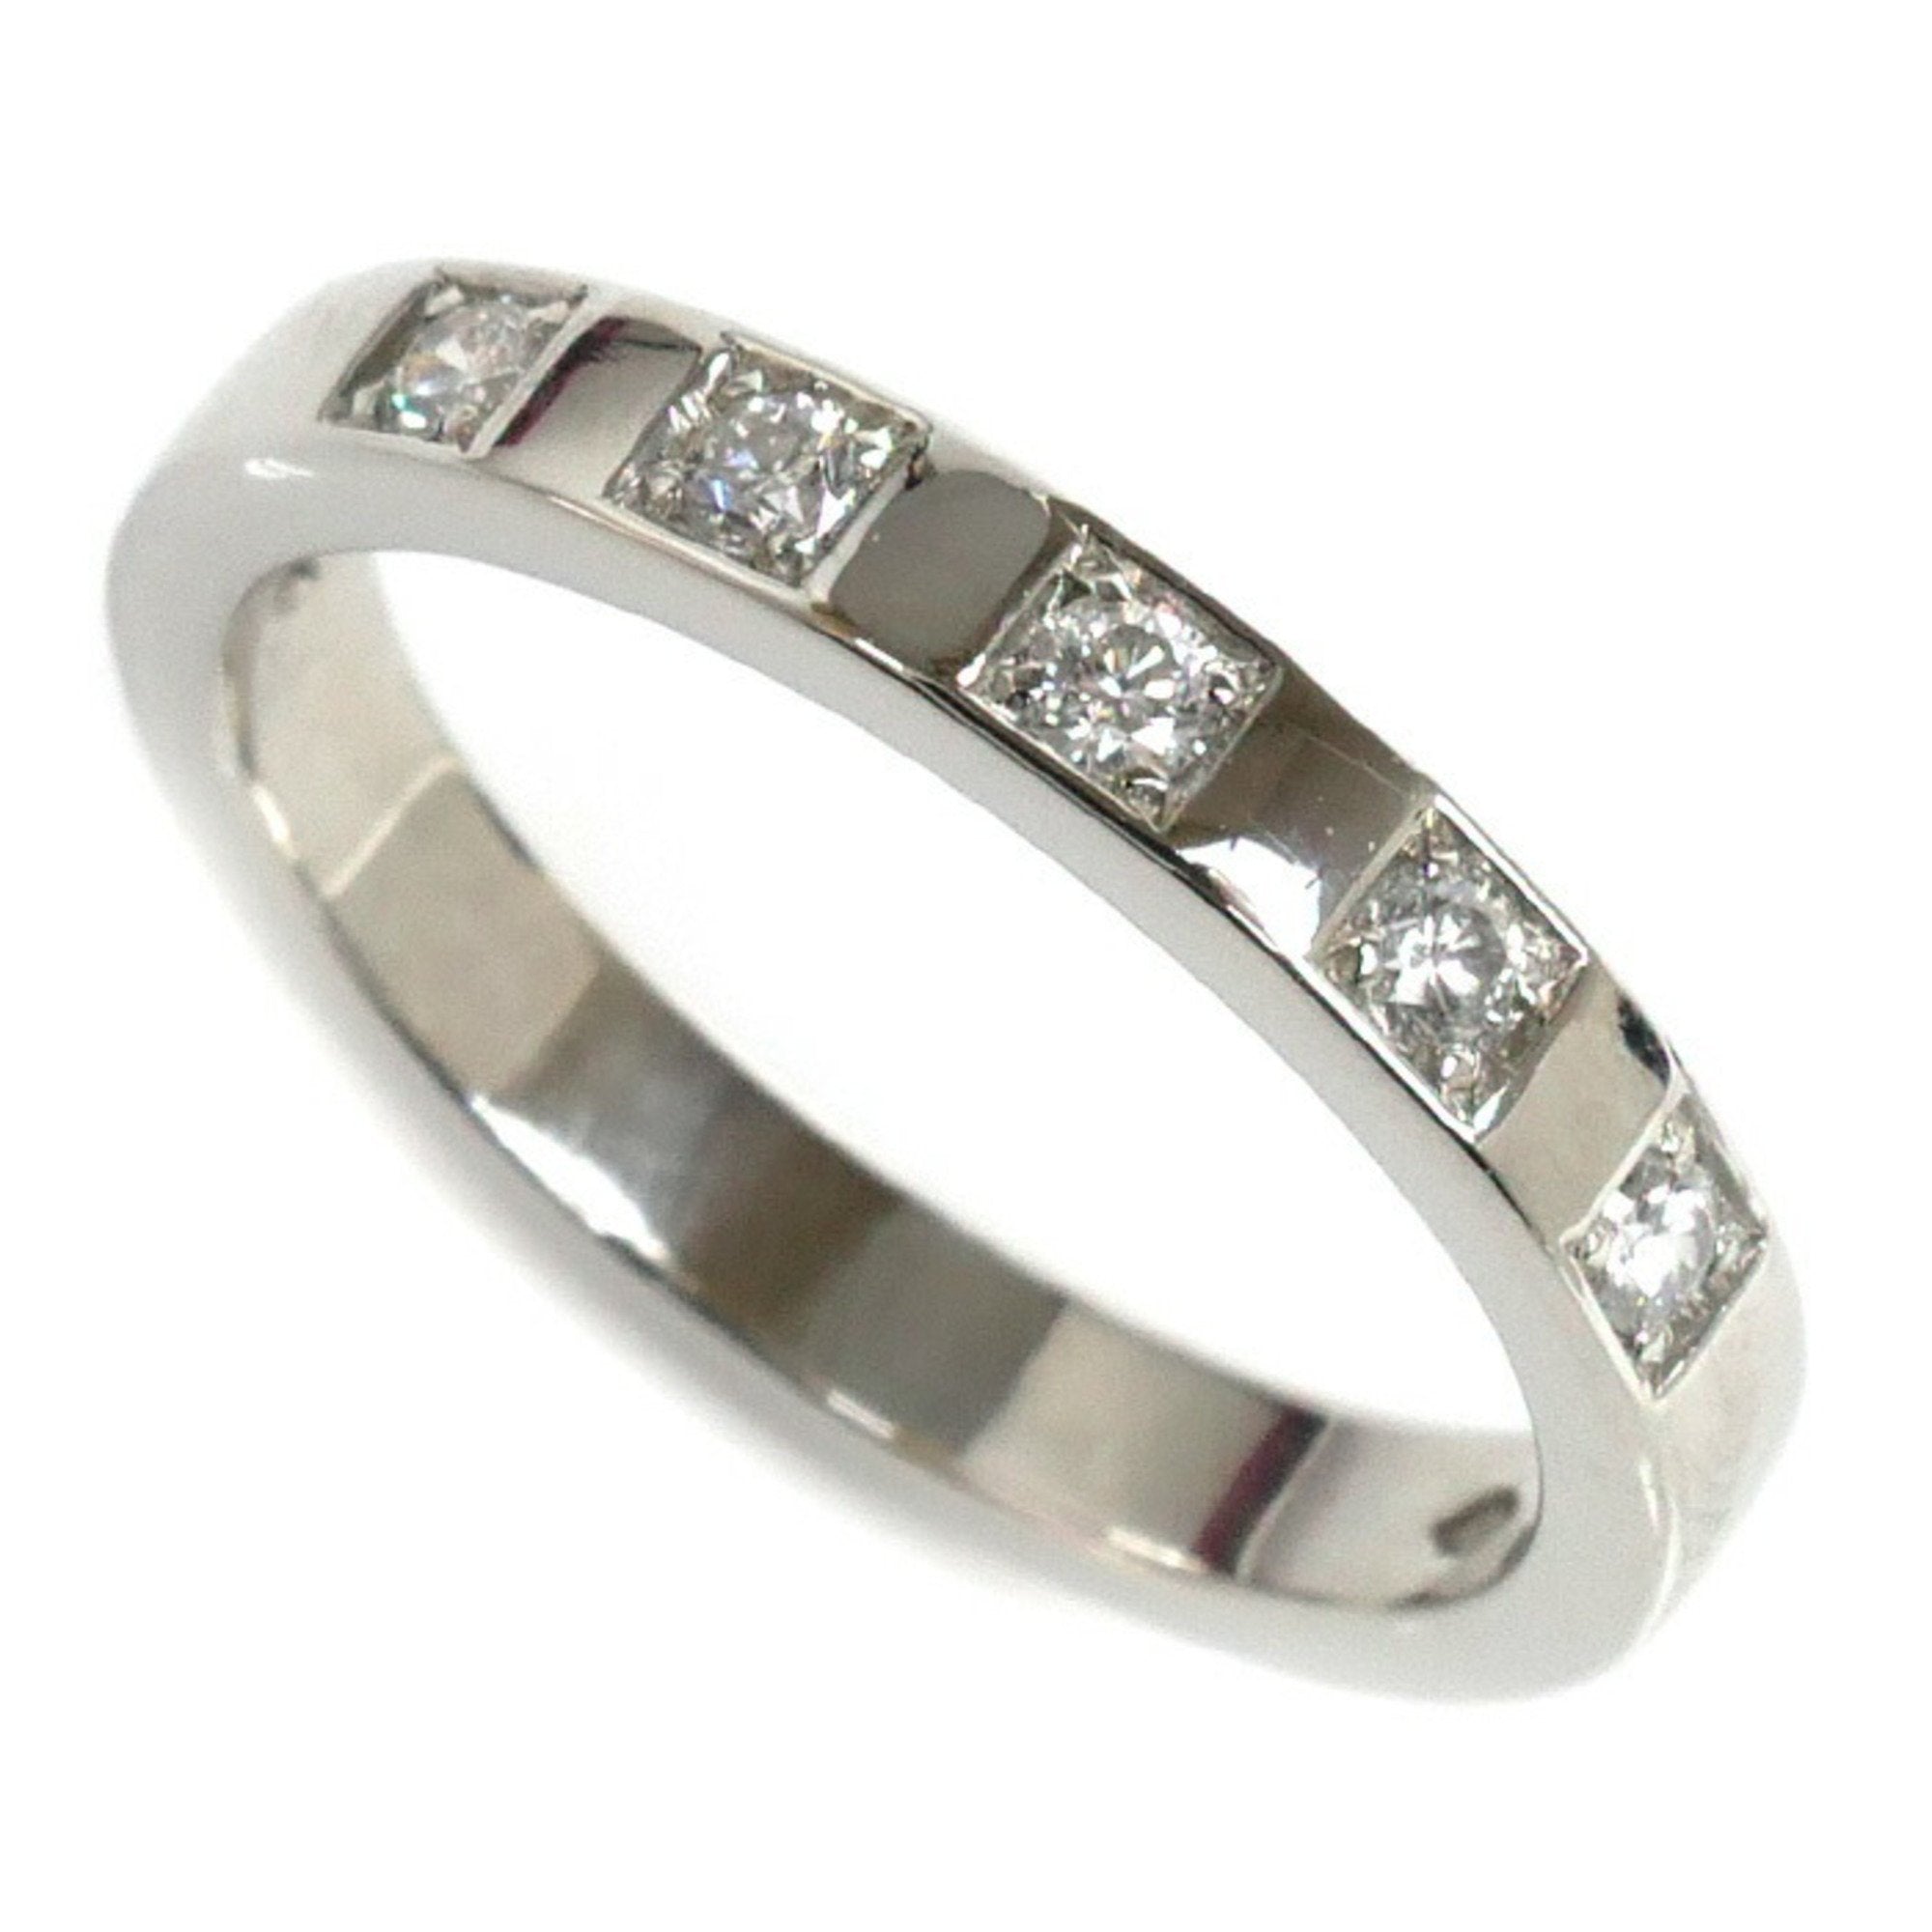 Pt950 Platinum Marry Me 5PD Ring 336853 Diamond Size 14 6.2g Women's